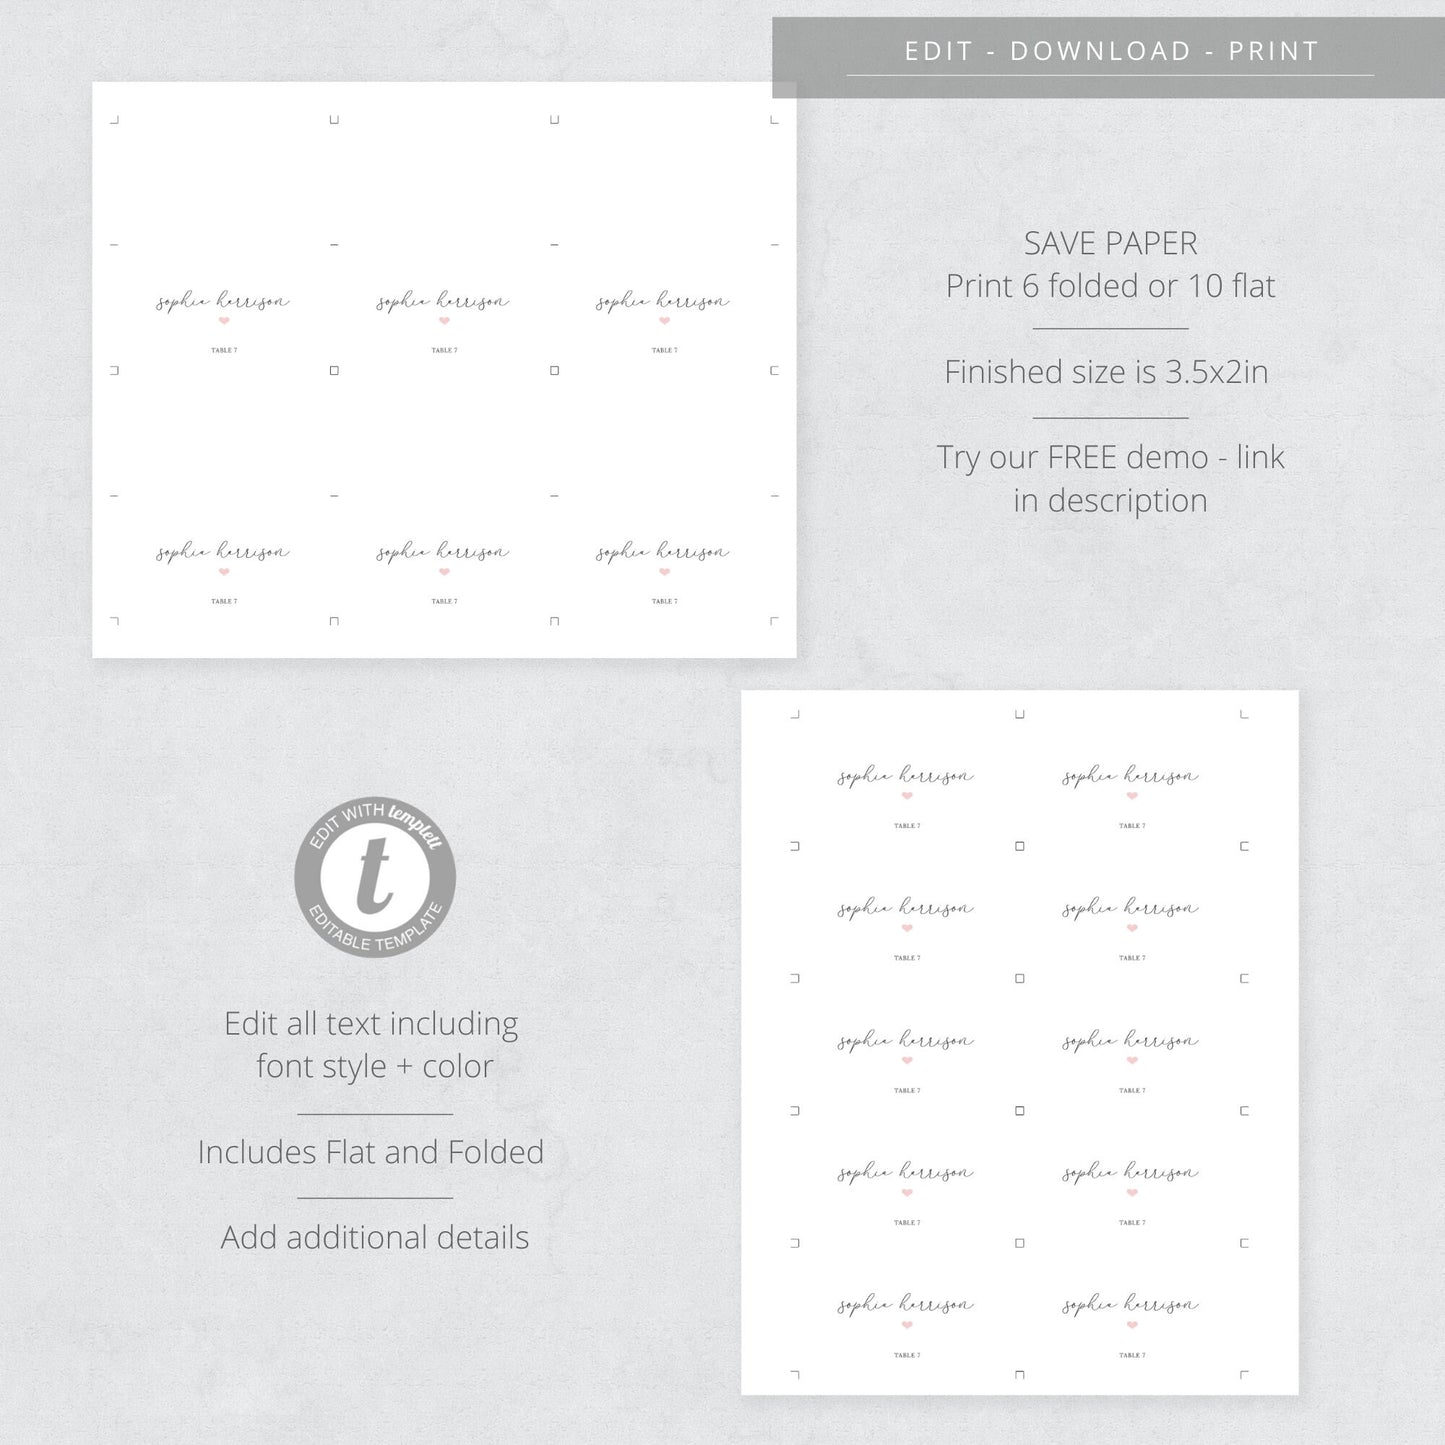 Editable  Script Wedding Place Card Wedding Name Card with Heart Escort Card Template